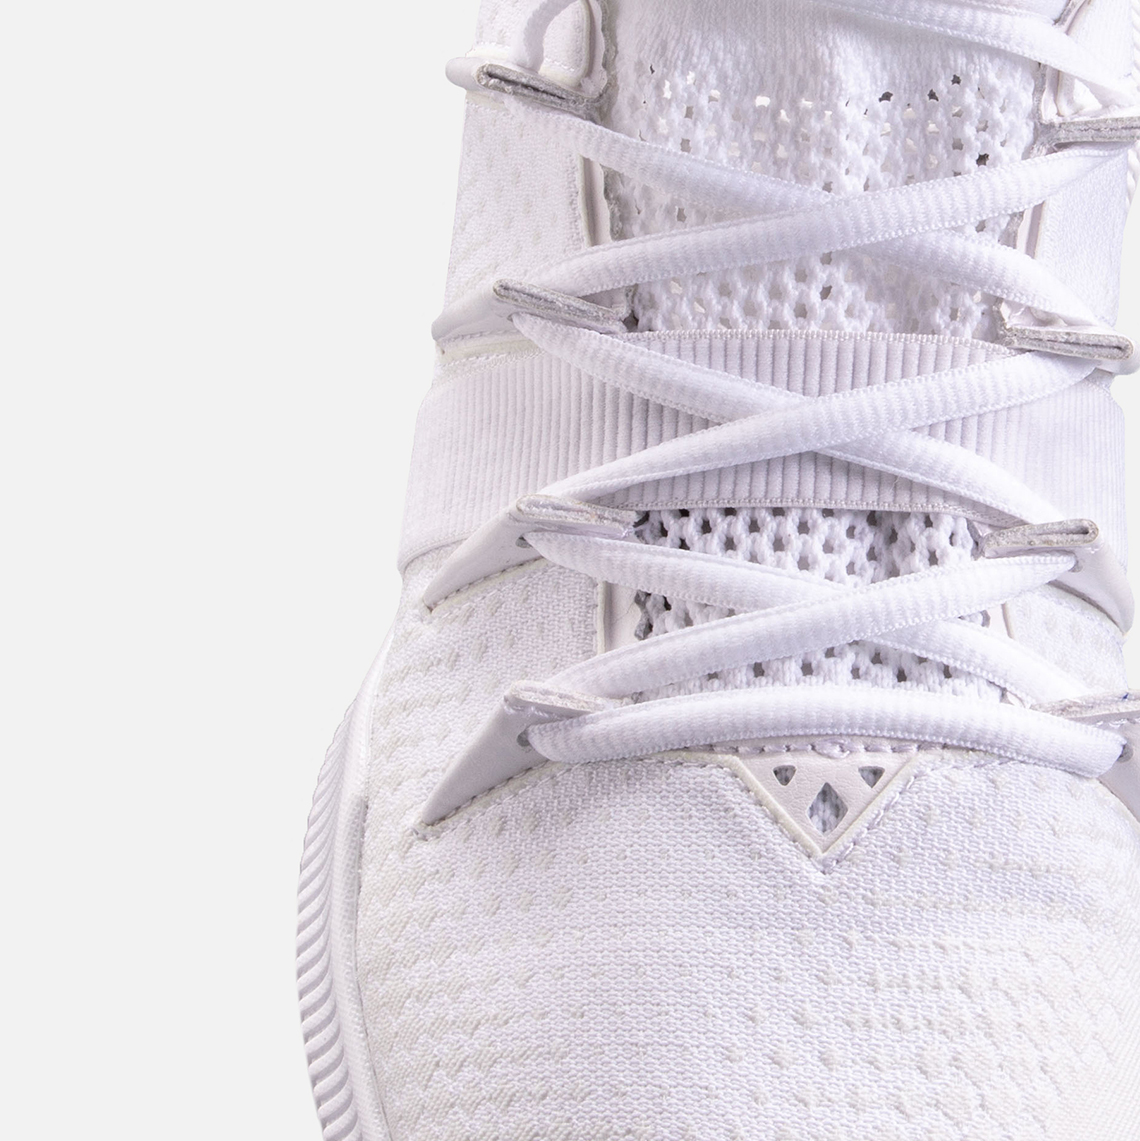 New Balance OMN1S White Gold - Release Info | SneakerNews.com